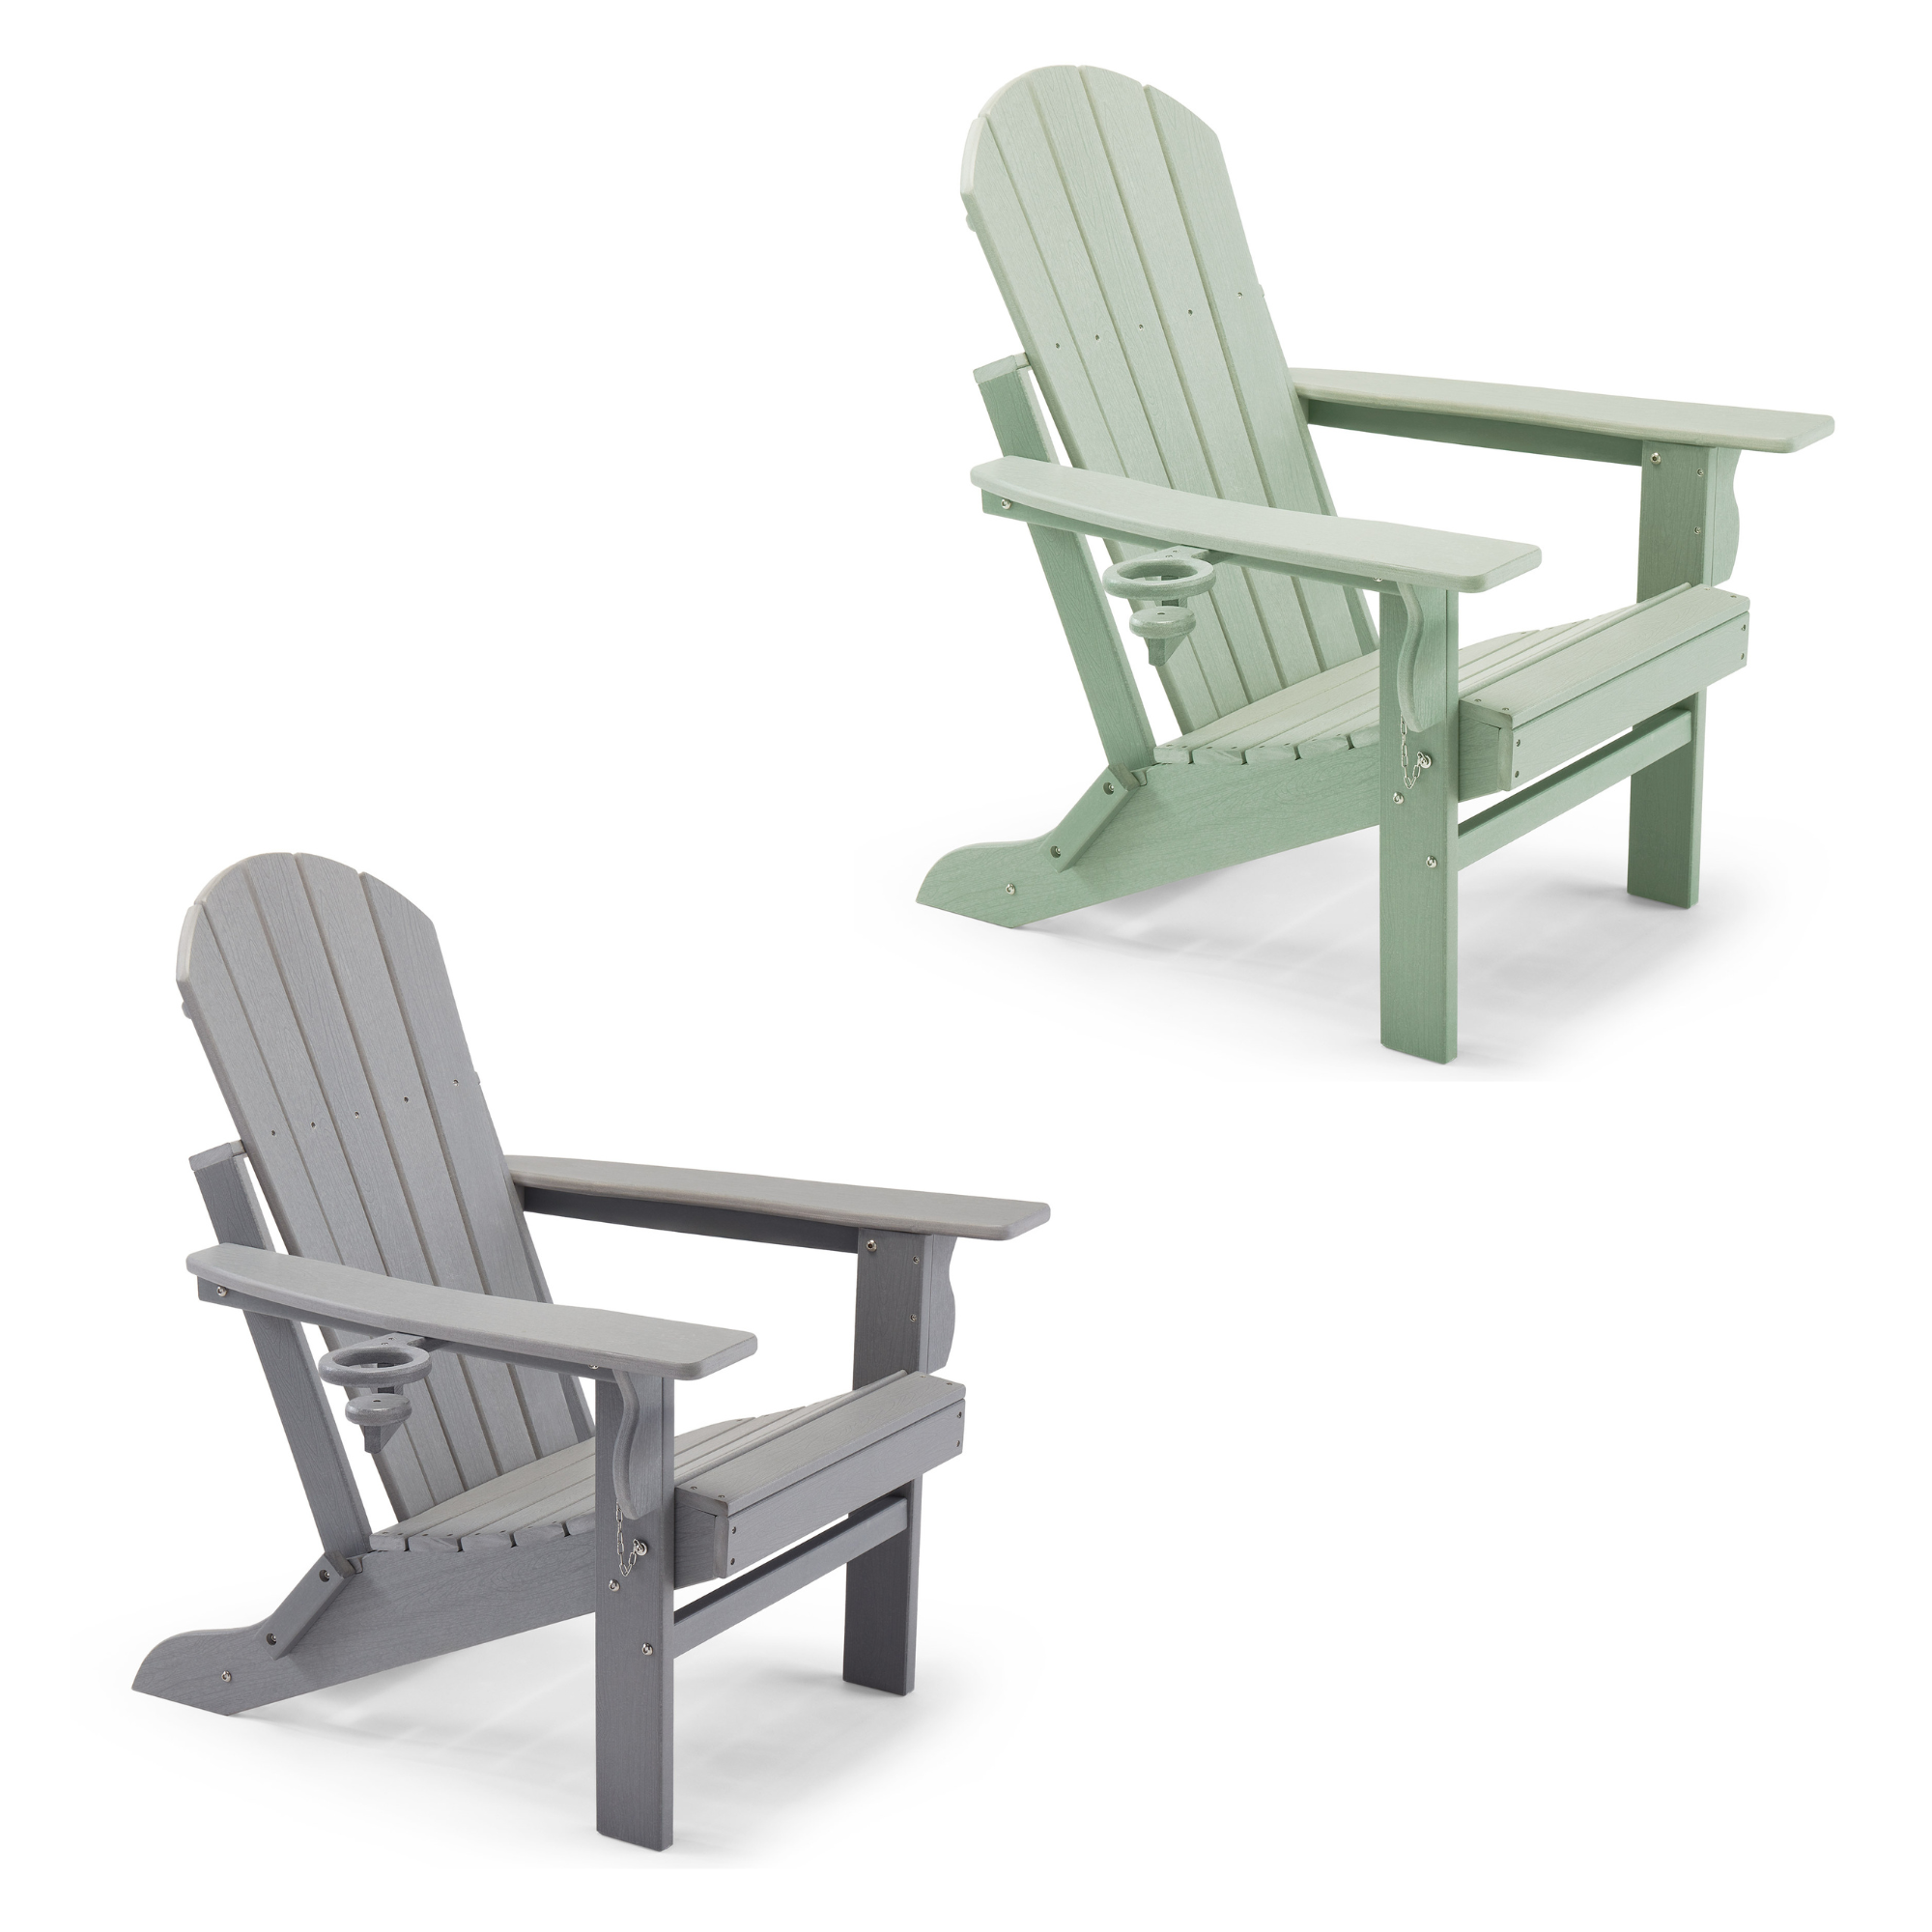 Folding Adirondack Chairs, Waterproof HDPE Garden Chairs, VonHaus